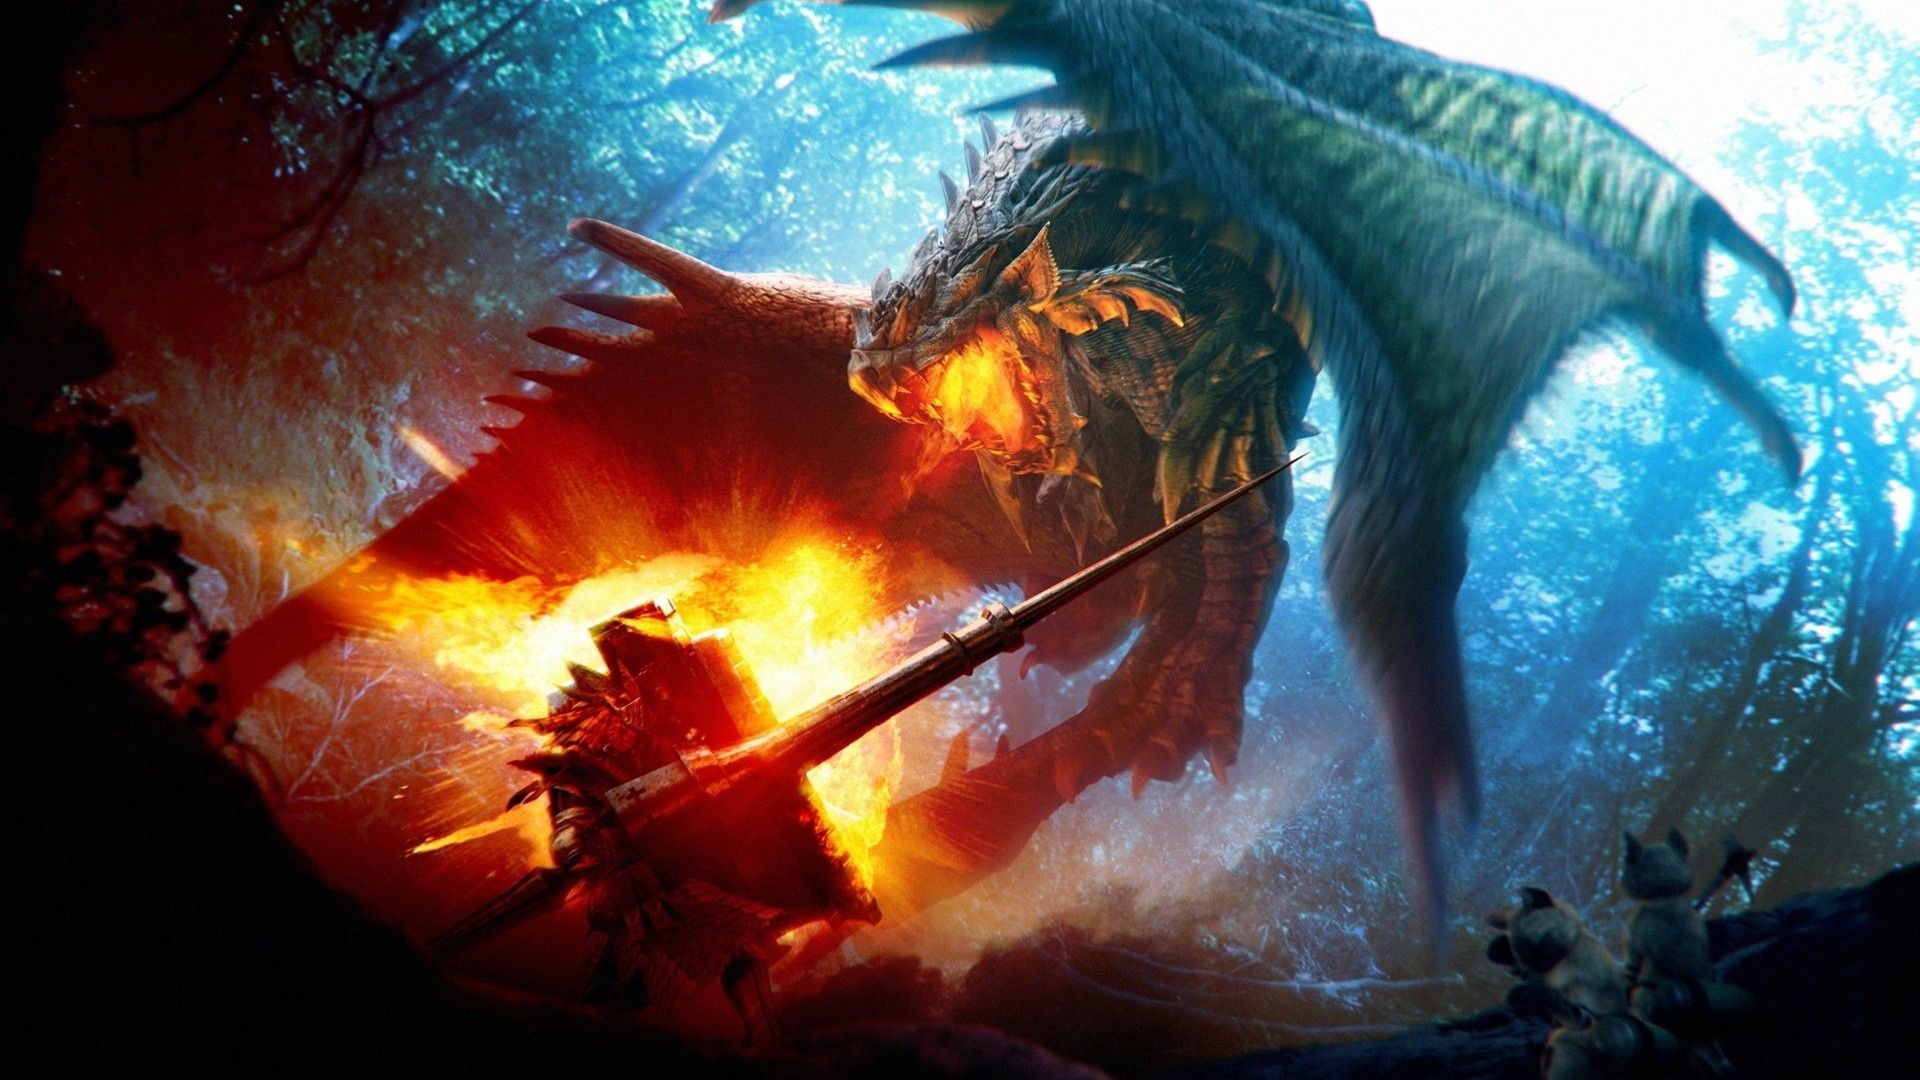 Fire breathing dragon wallpaper. Fire breathing dragon, Fantasy dragon, Red dragon